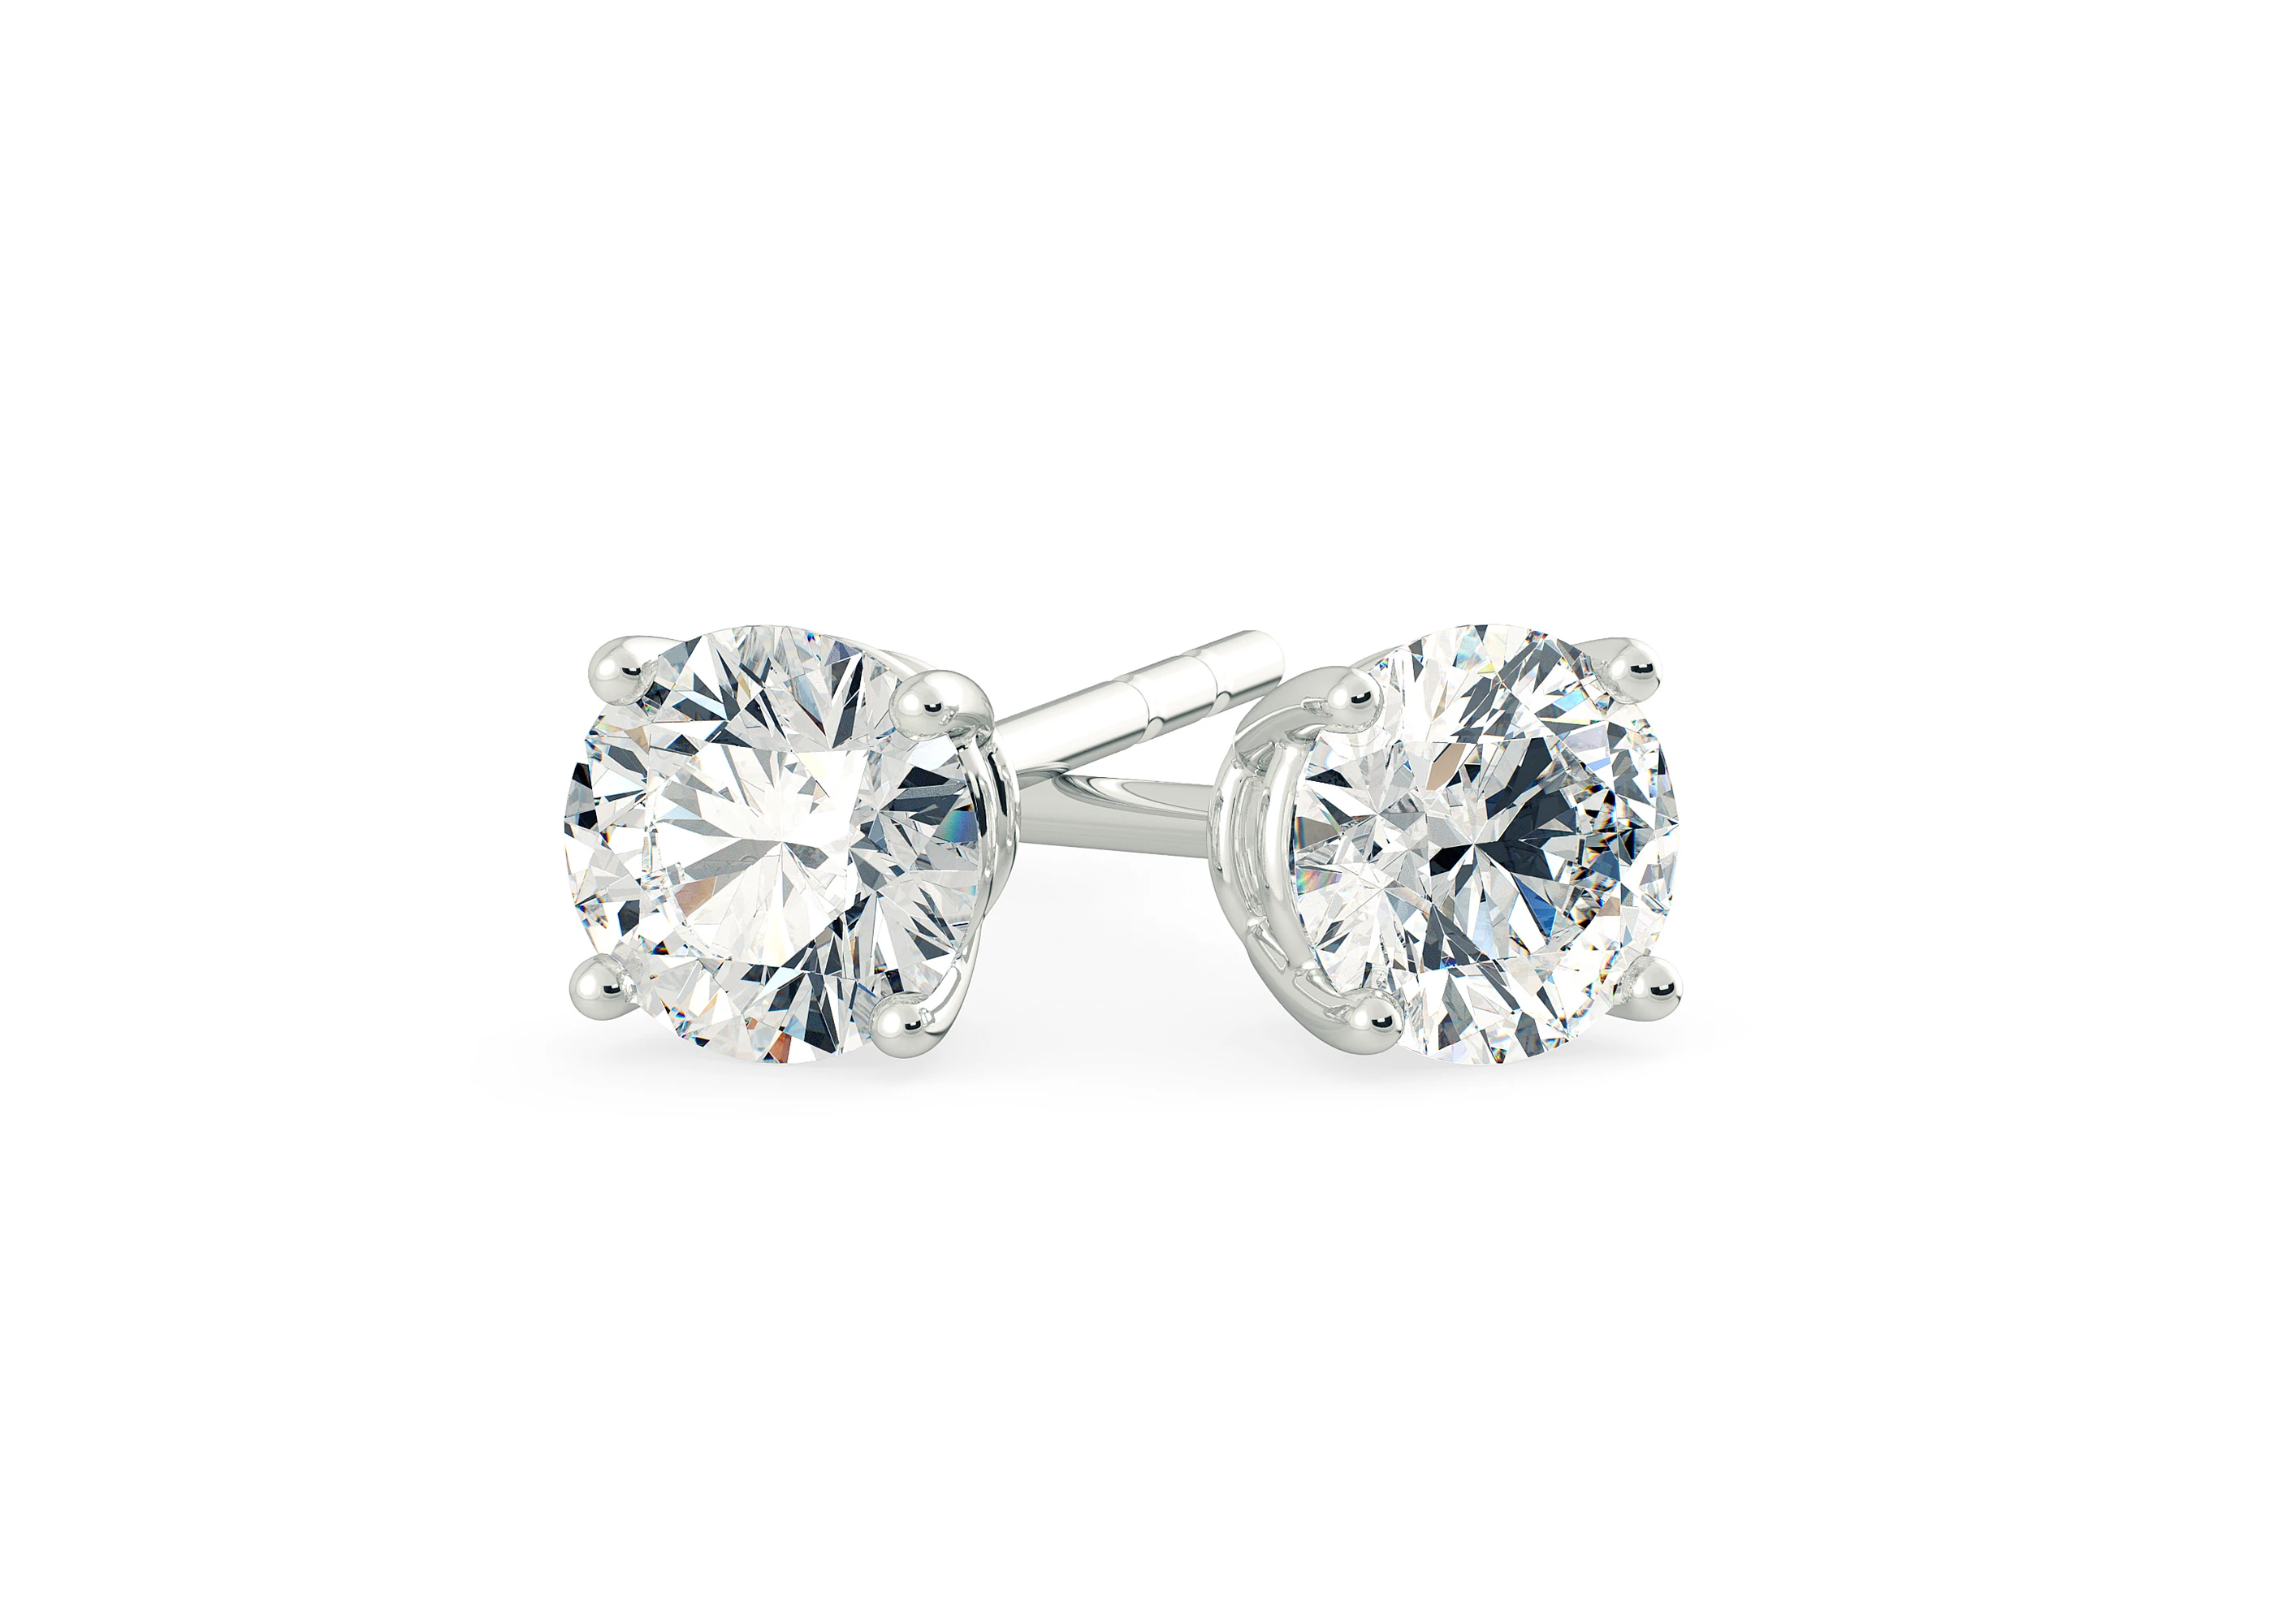 Ettore Round Brilliant Diamond Stud Earrings in Platinum with Screw Backs